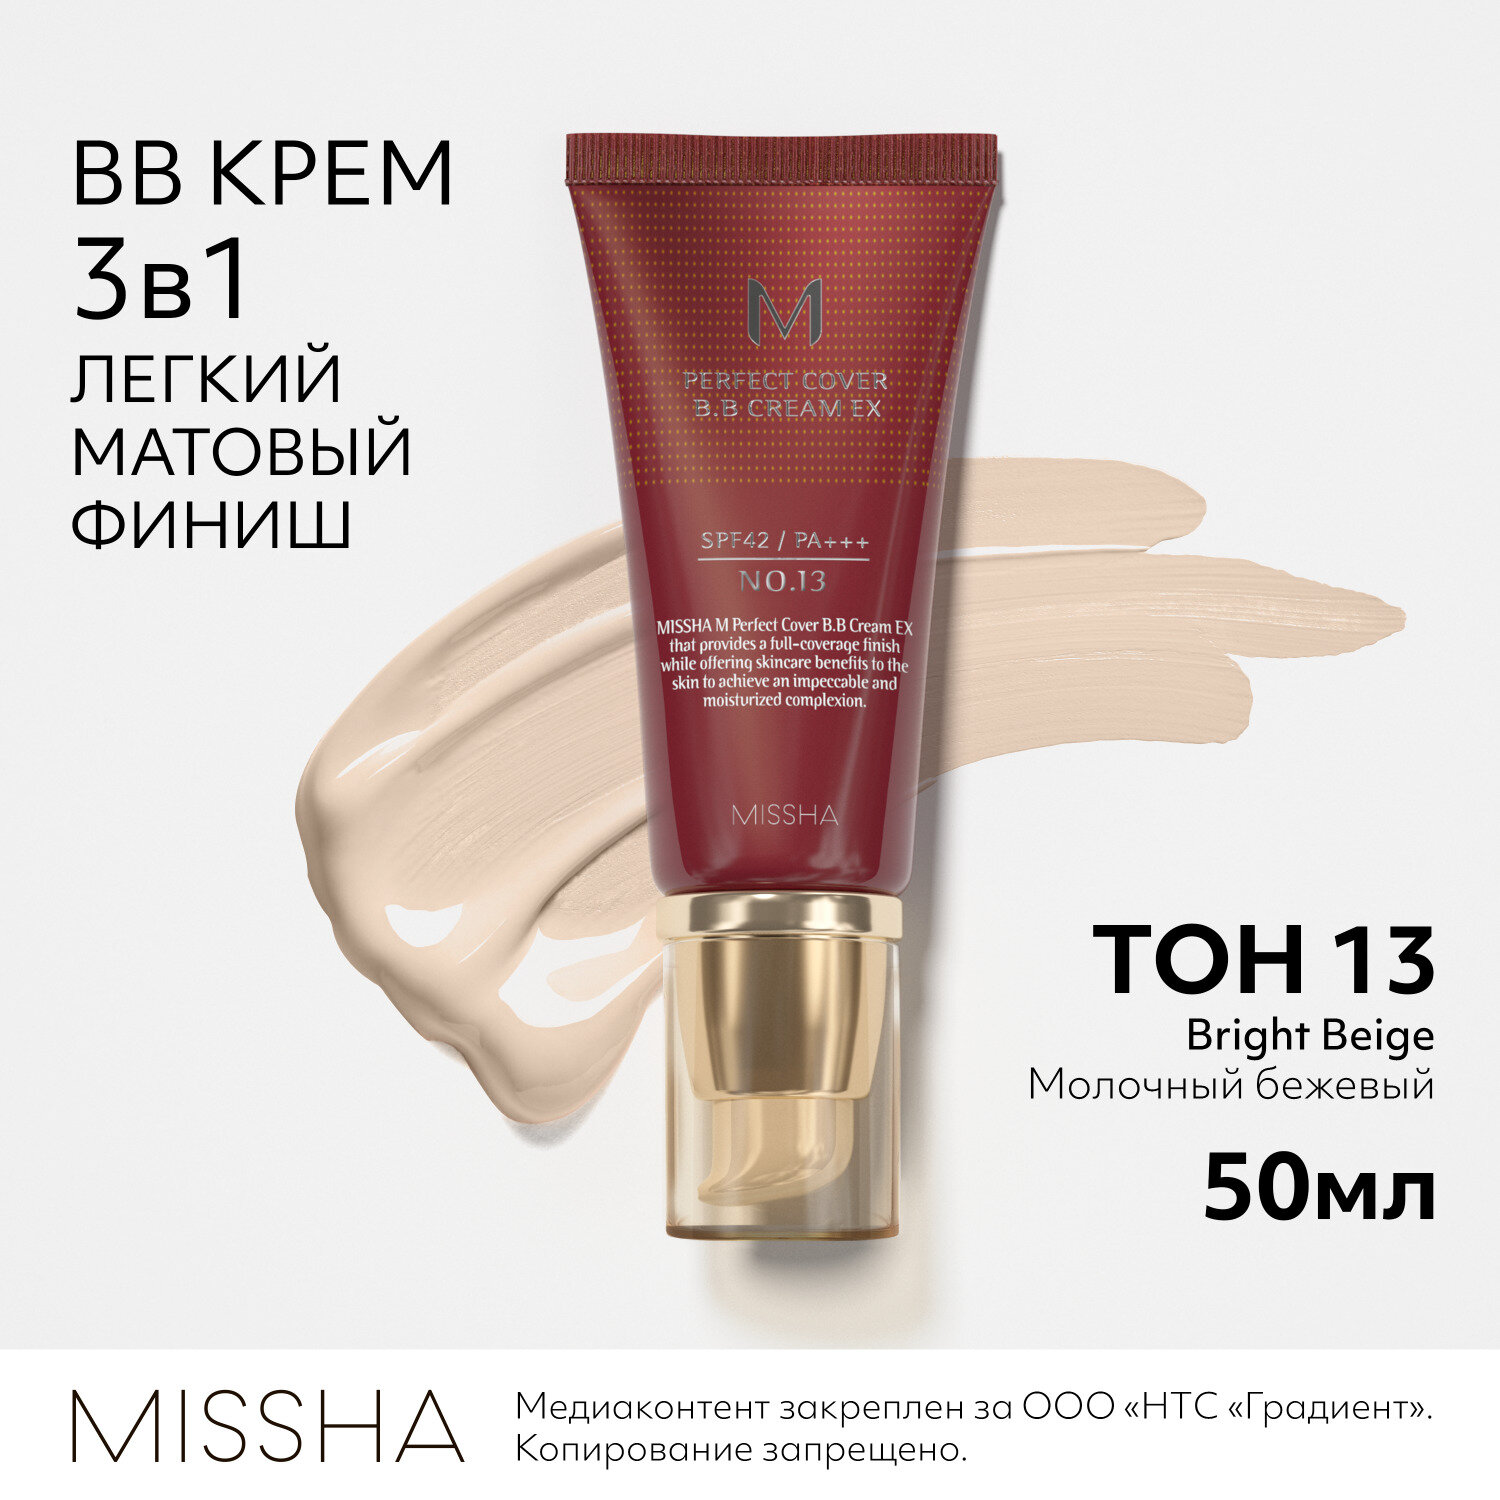 BB-крем для лица (тон 13 Насыщенный бежевый) | Missha Perfect Cover BB Cream SPF42 №13 Bright Beige 50ml